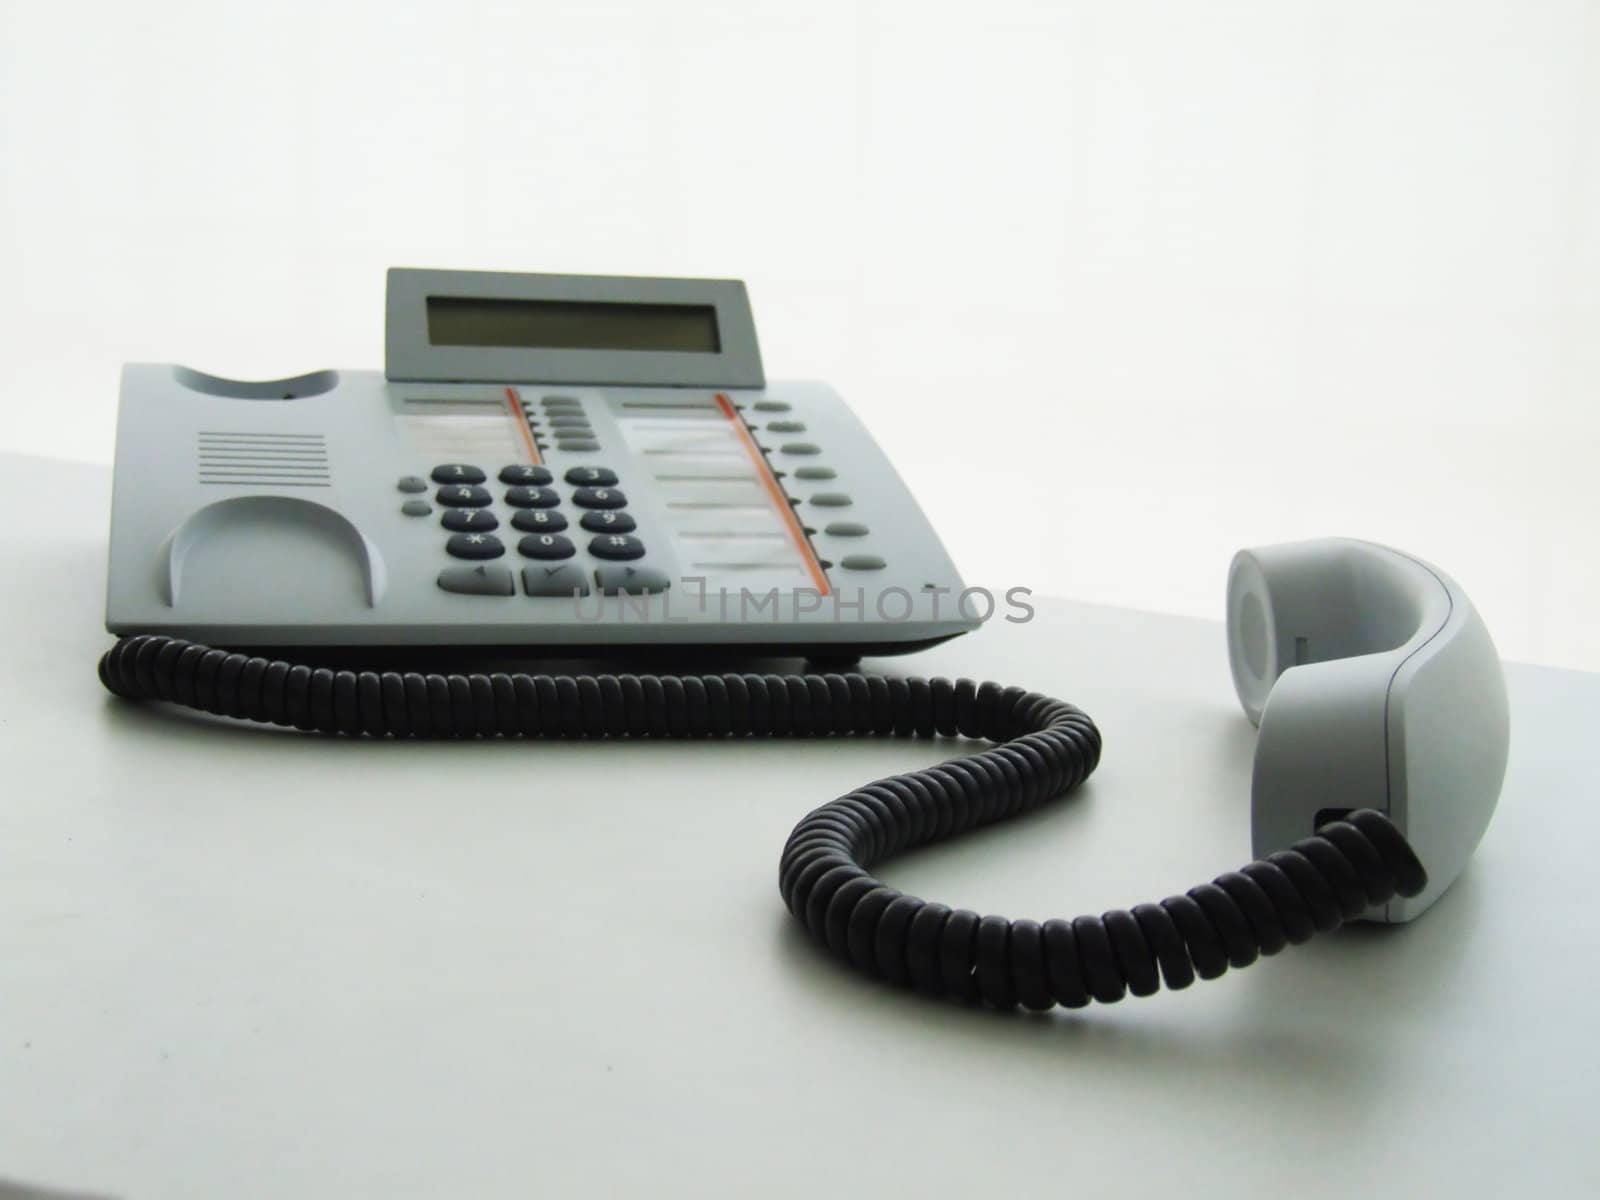 Modern desktop phone for business